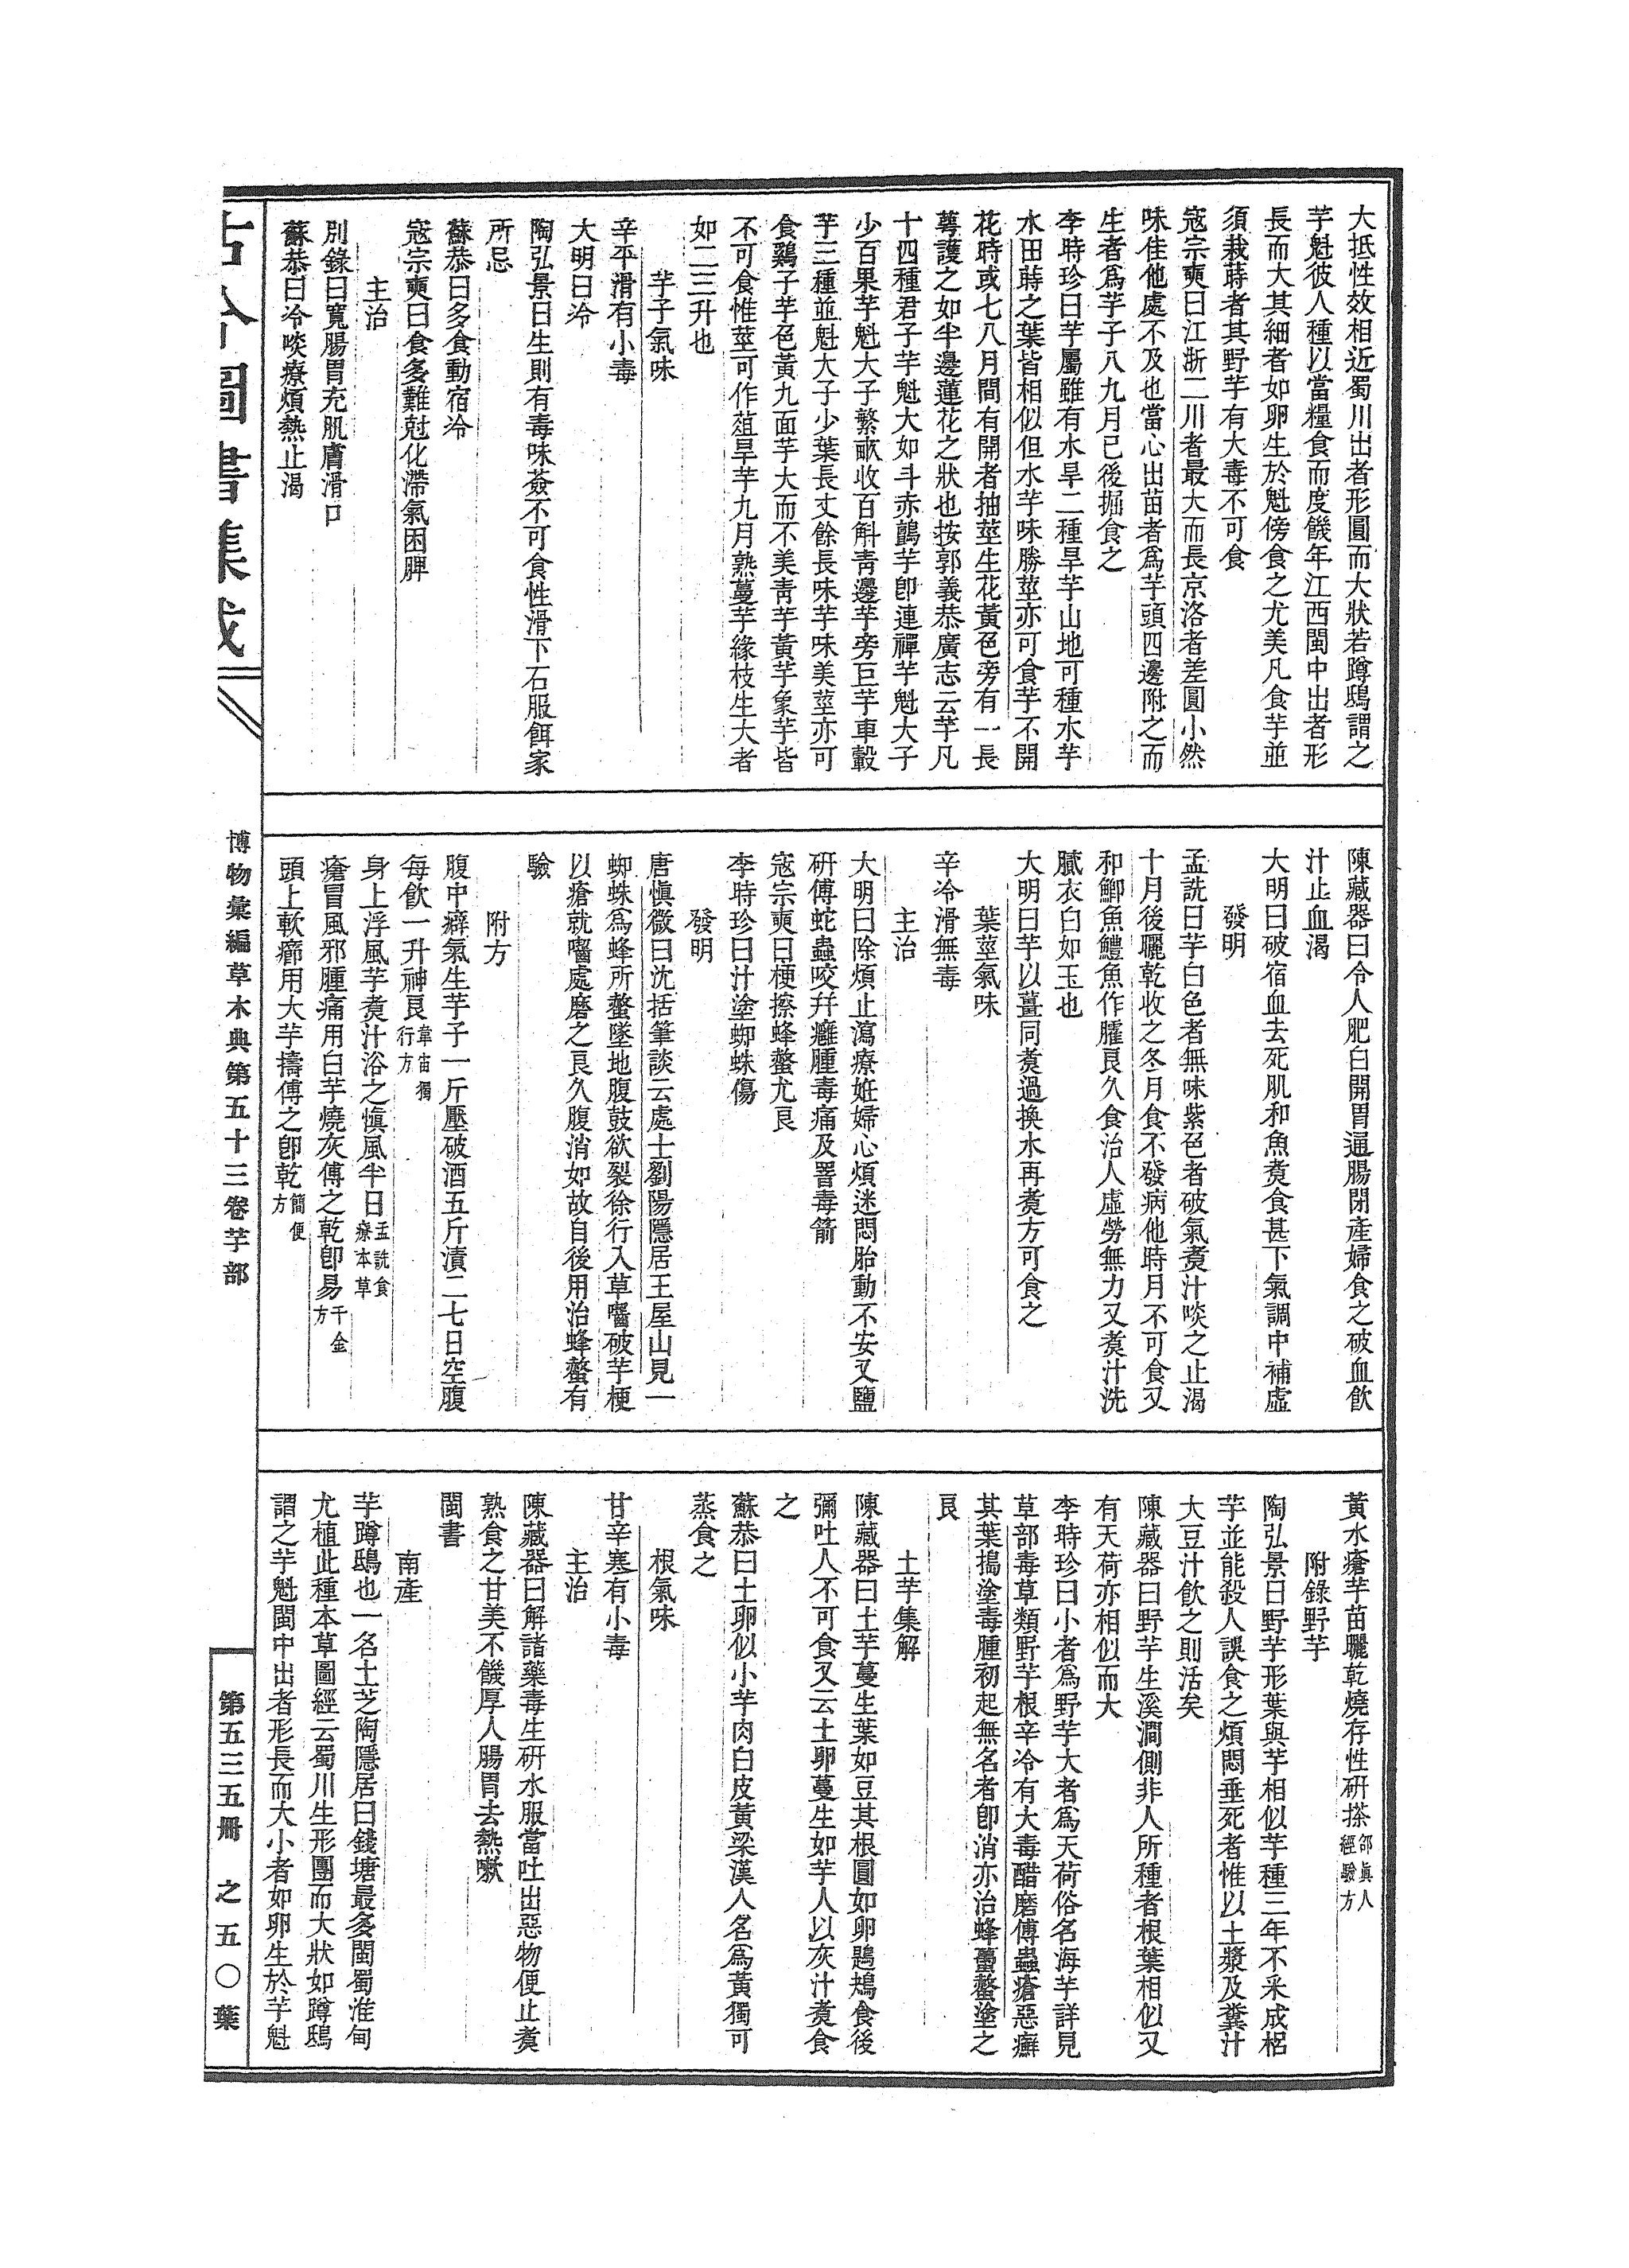 Page Gujin Tushu Jicheng Volume 535 1700 1725 Djvu 100 维基文库 自由的图书馆